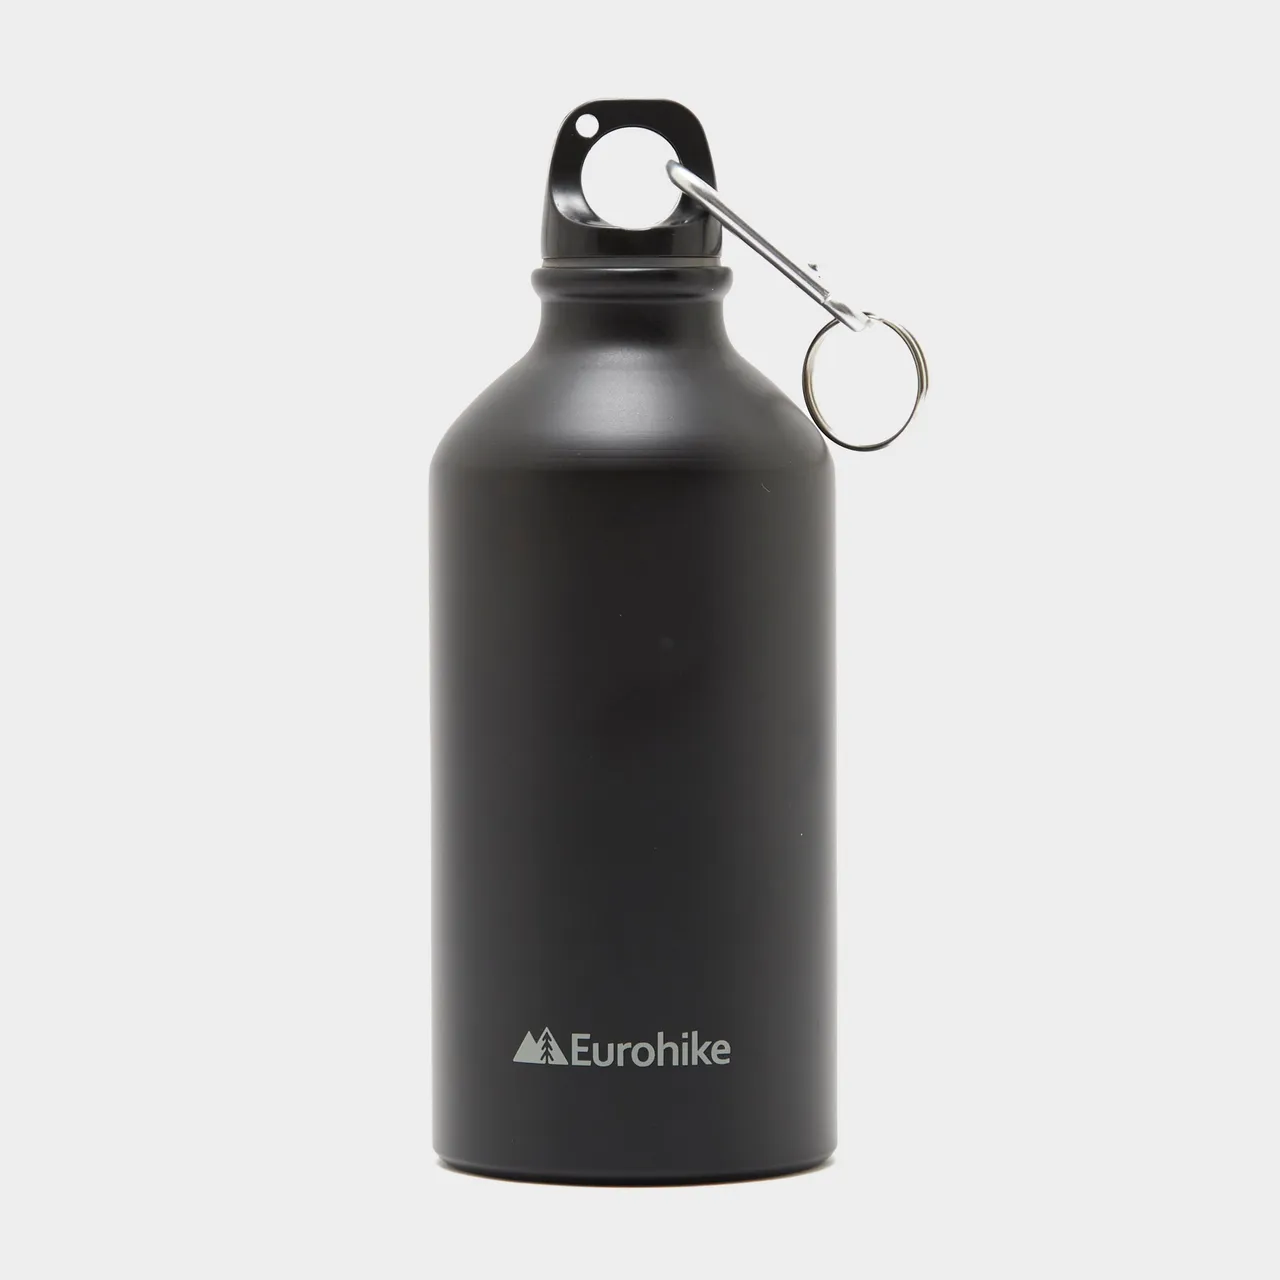 Aqua 0.5L Aluminium Water Bottle, Black